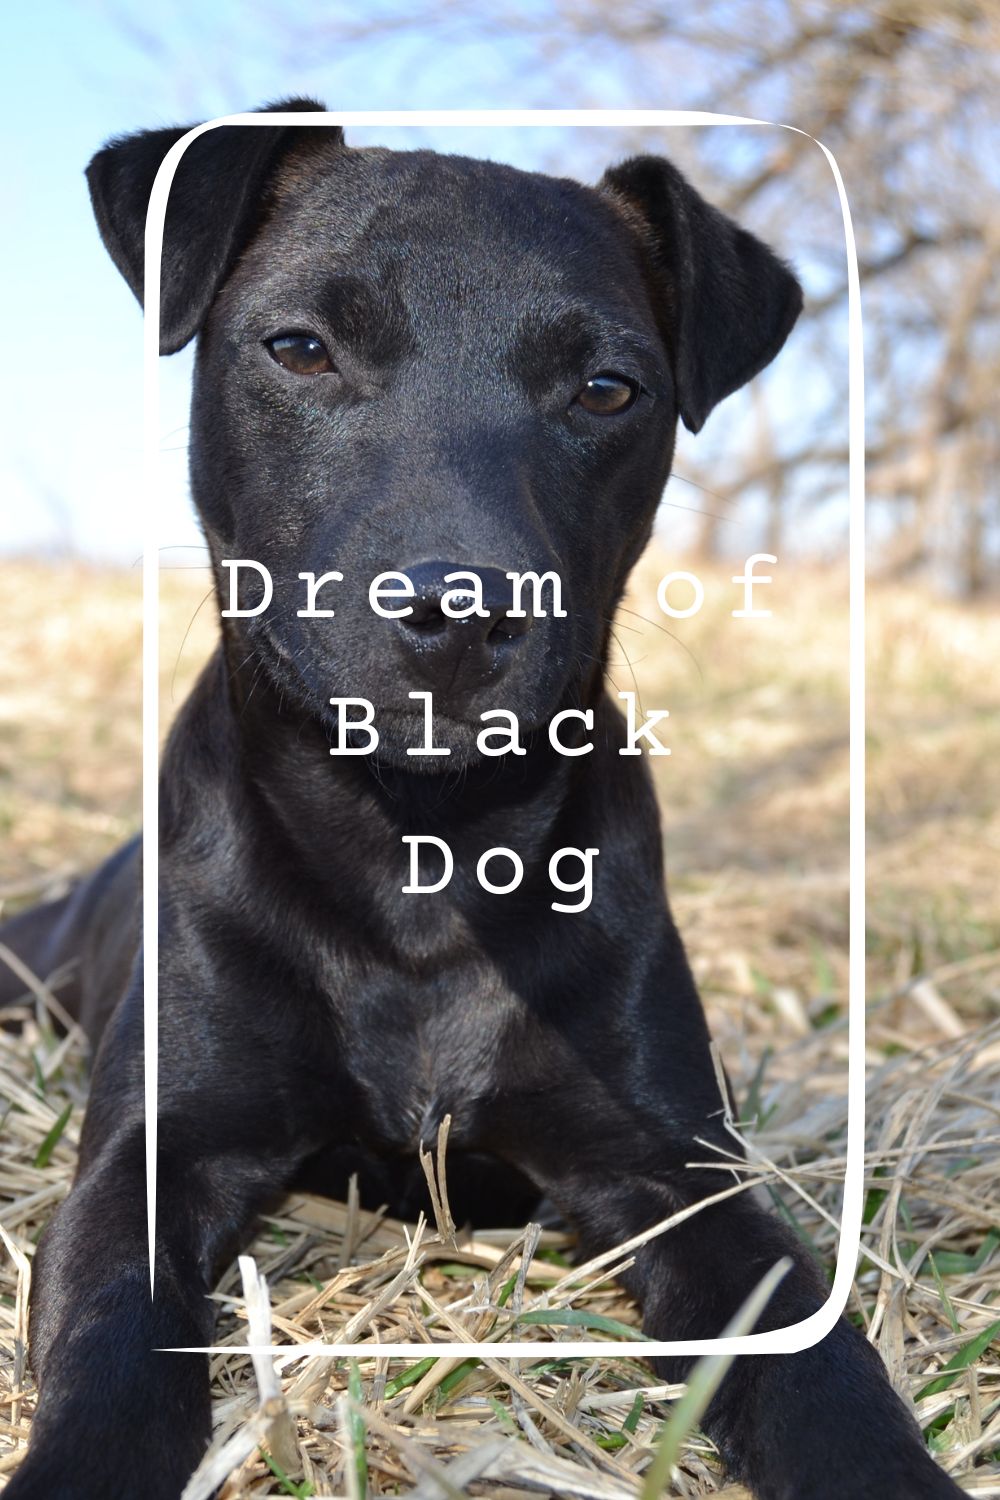 Dream of Black Dog 1